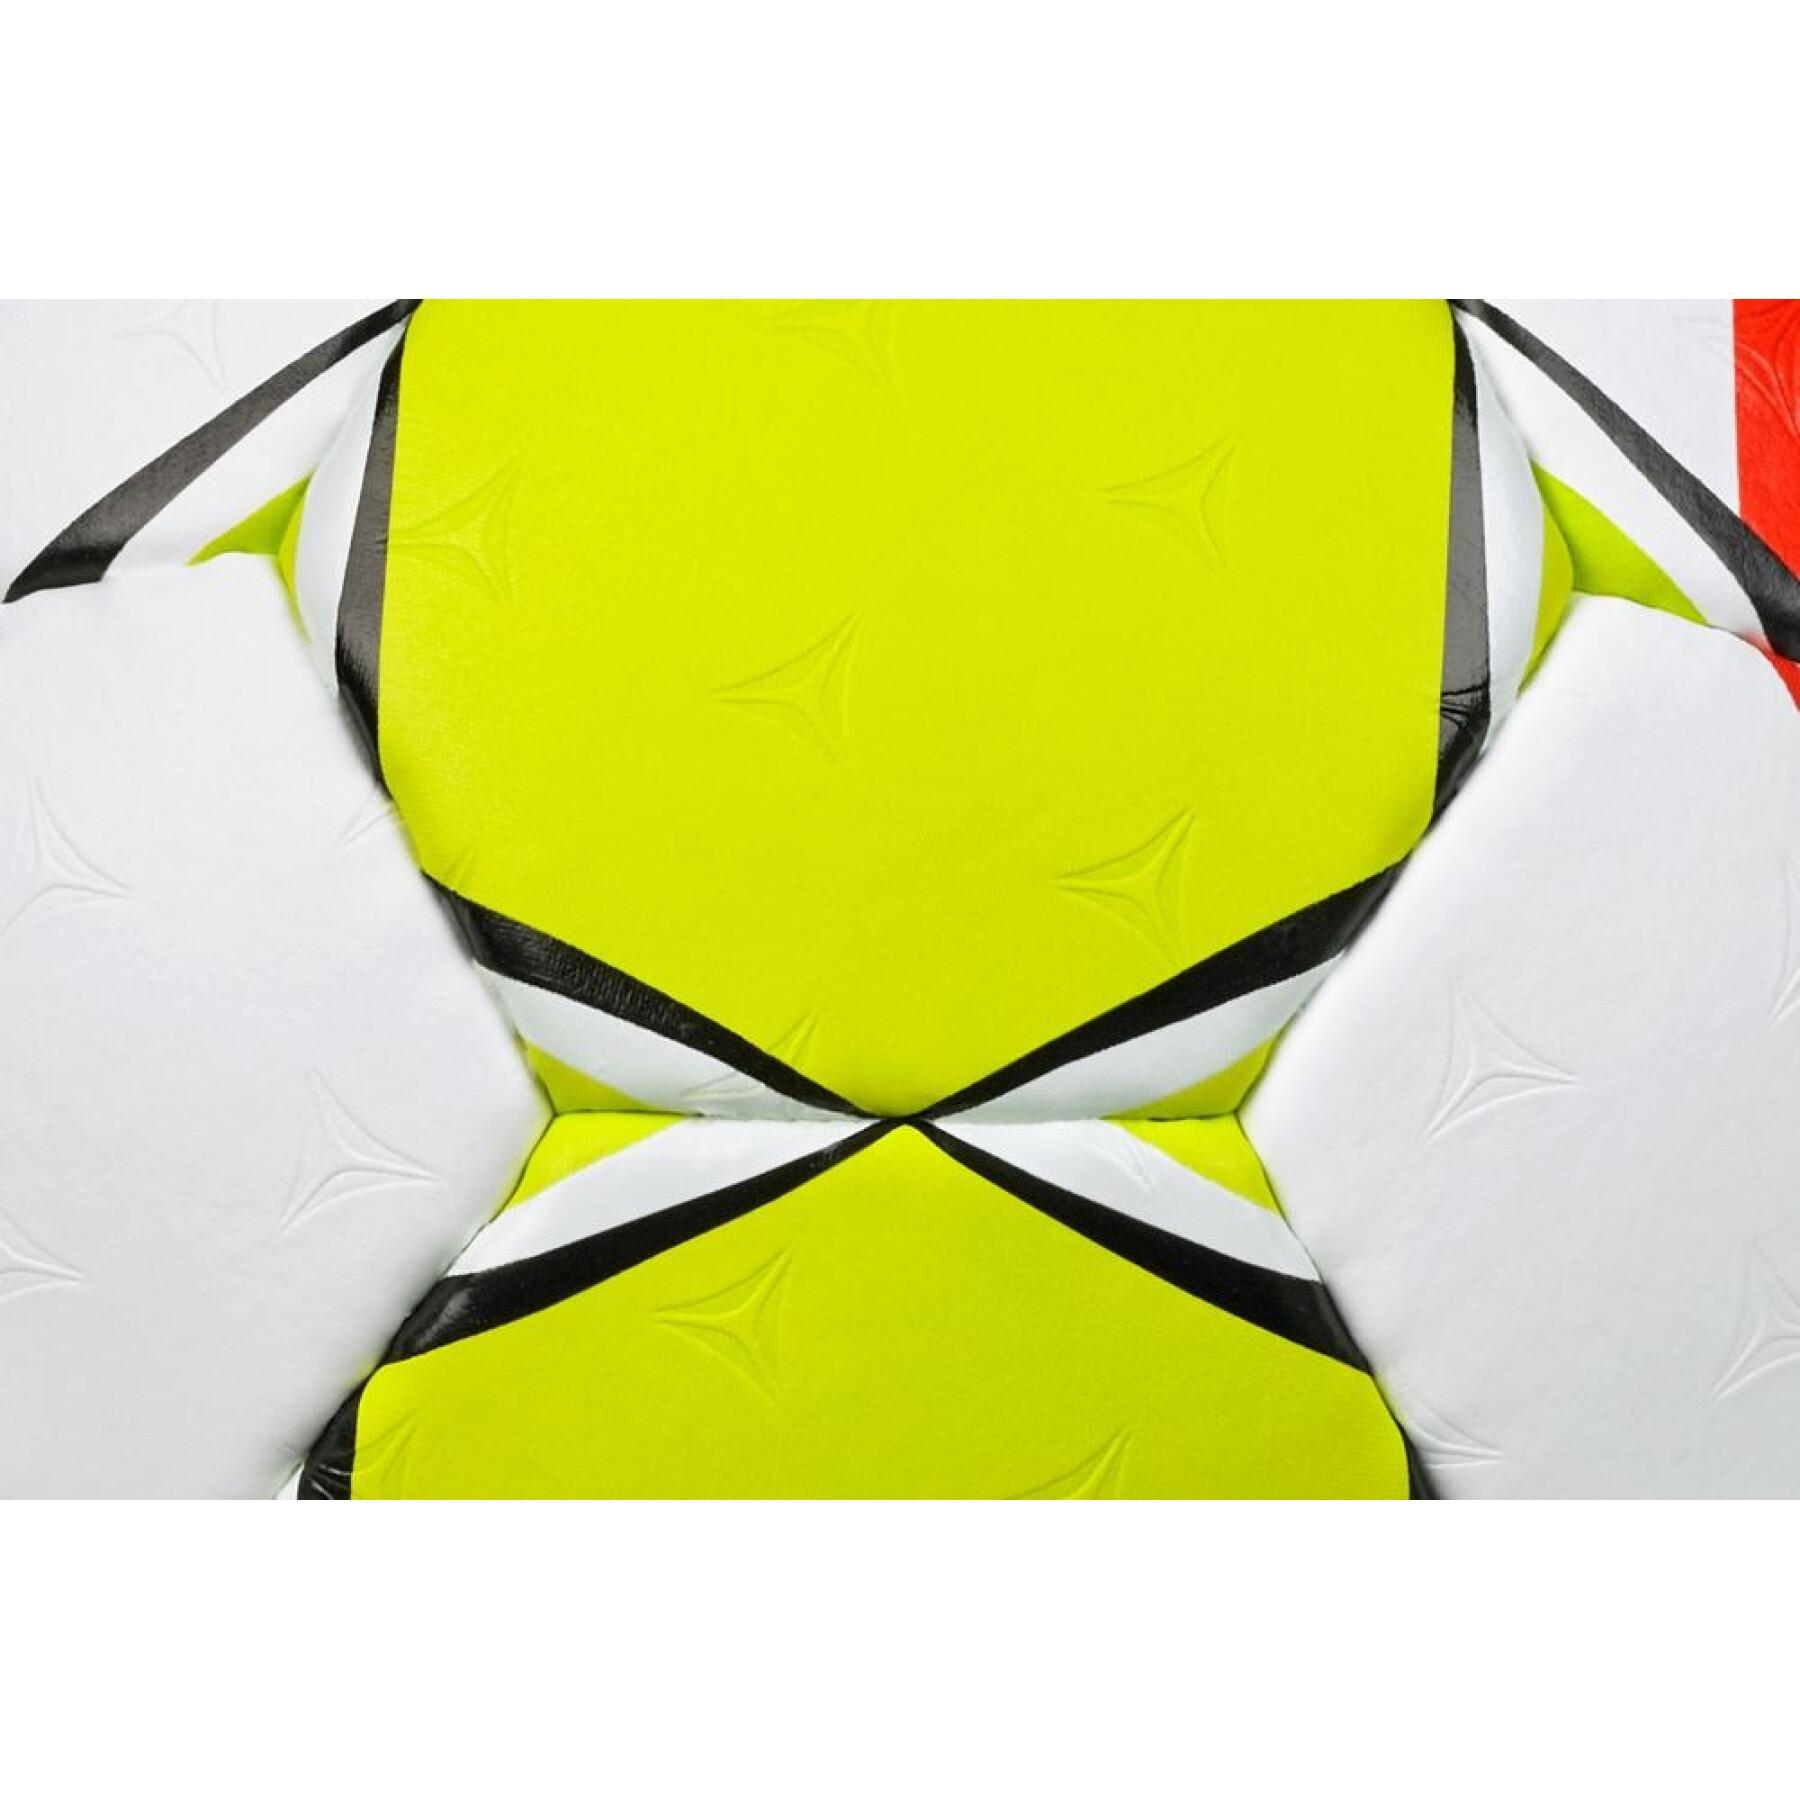 Handboll replica ehf euro feminin 2022